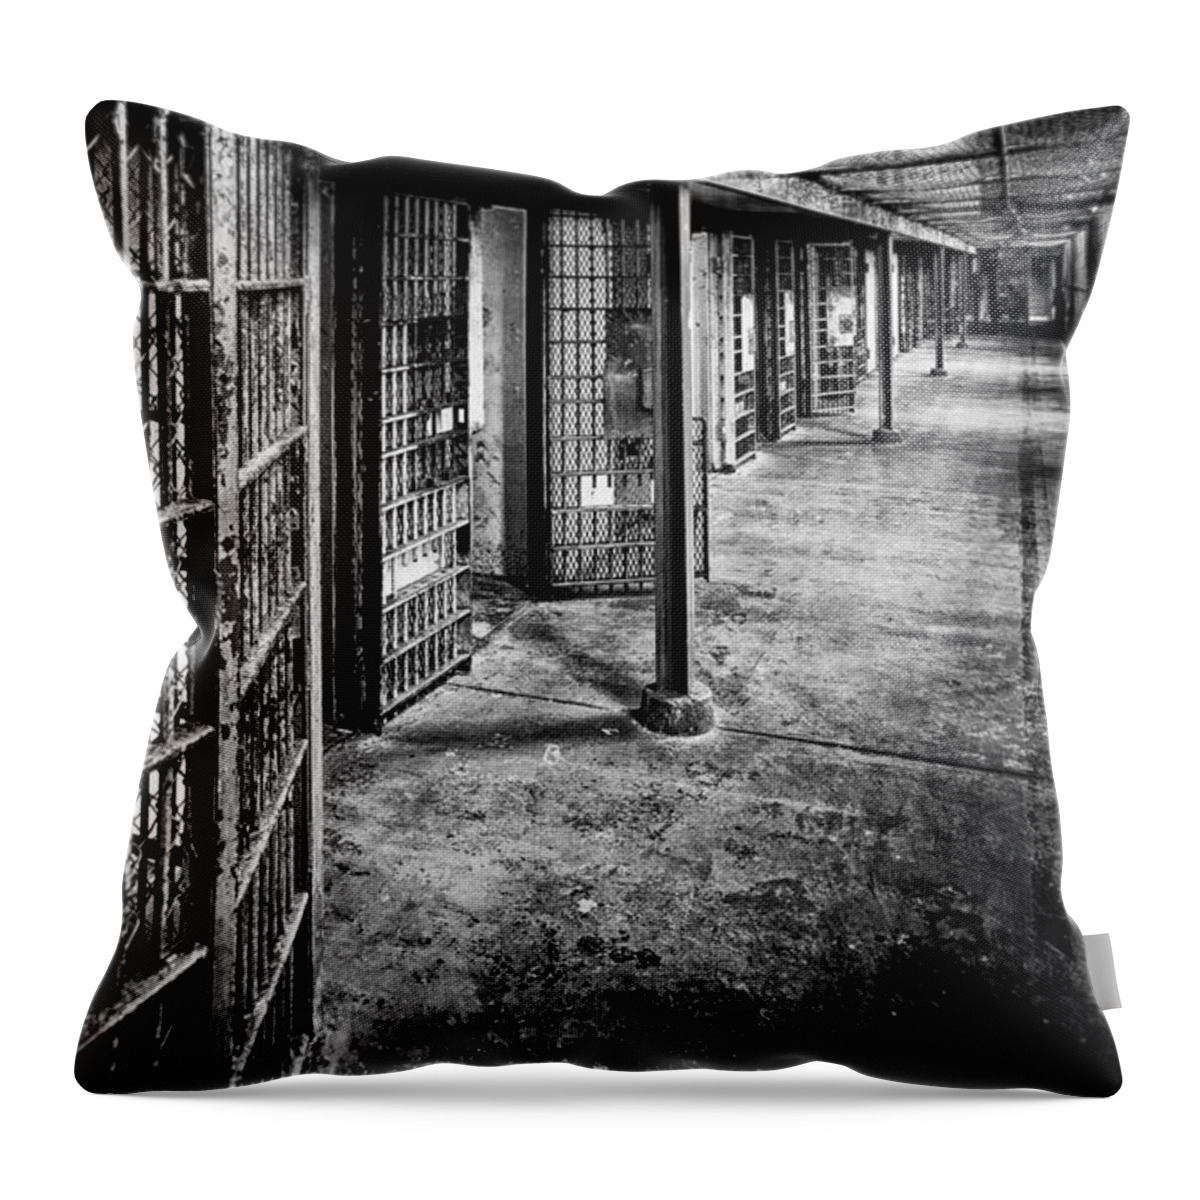 Abandon Throw Pillow featuring the photograph Cellblock No. 9 by Tom Mc Nemar